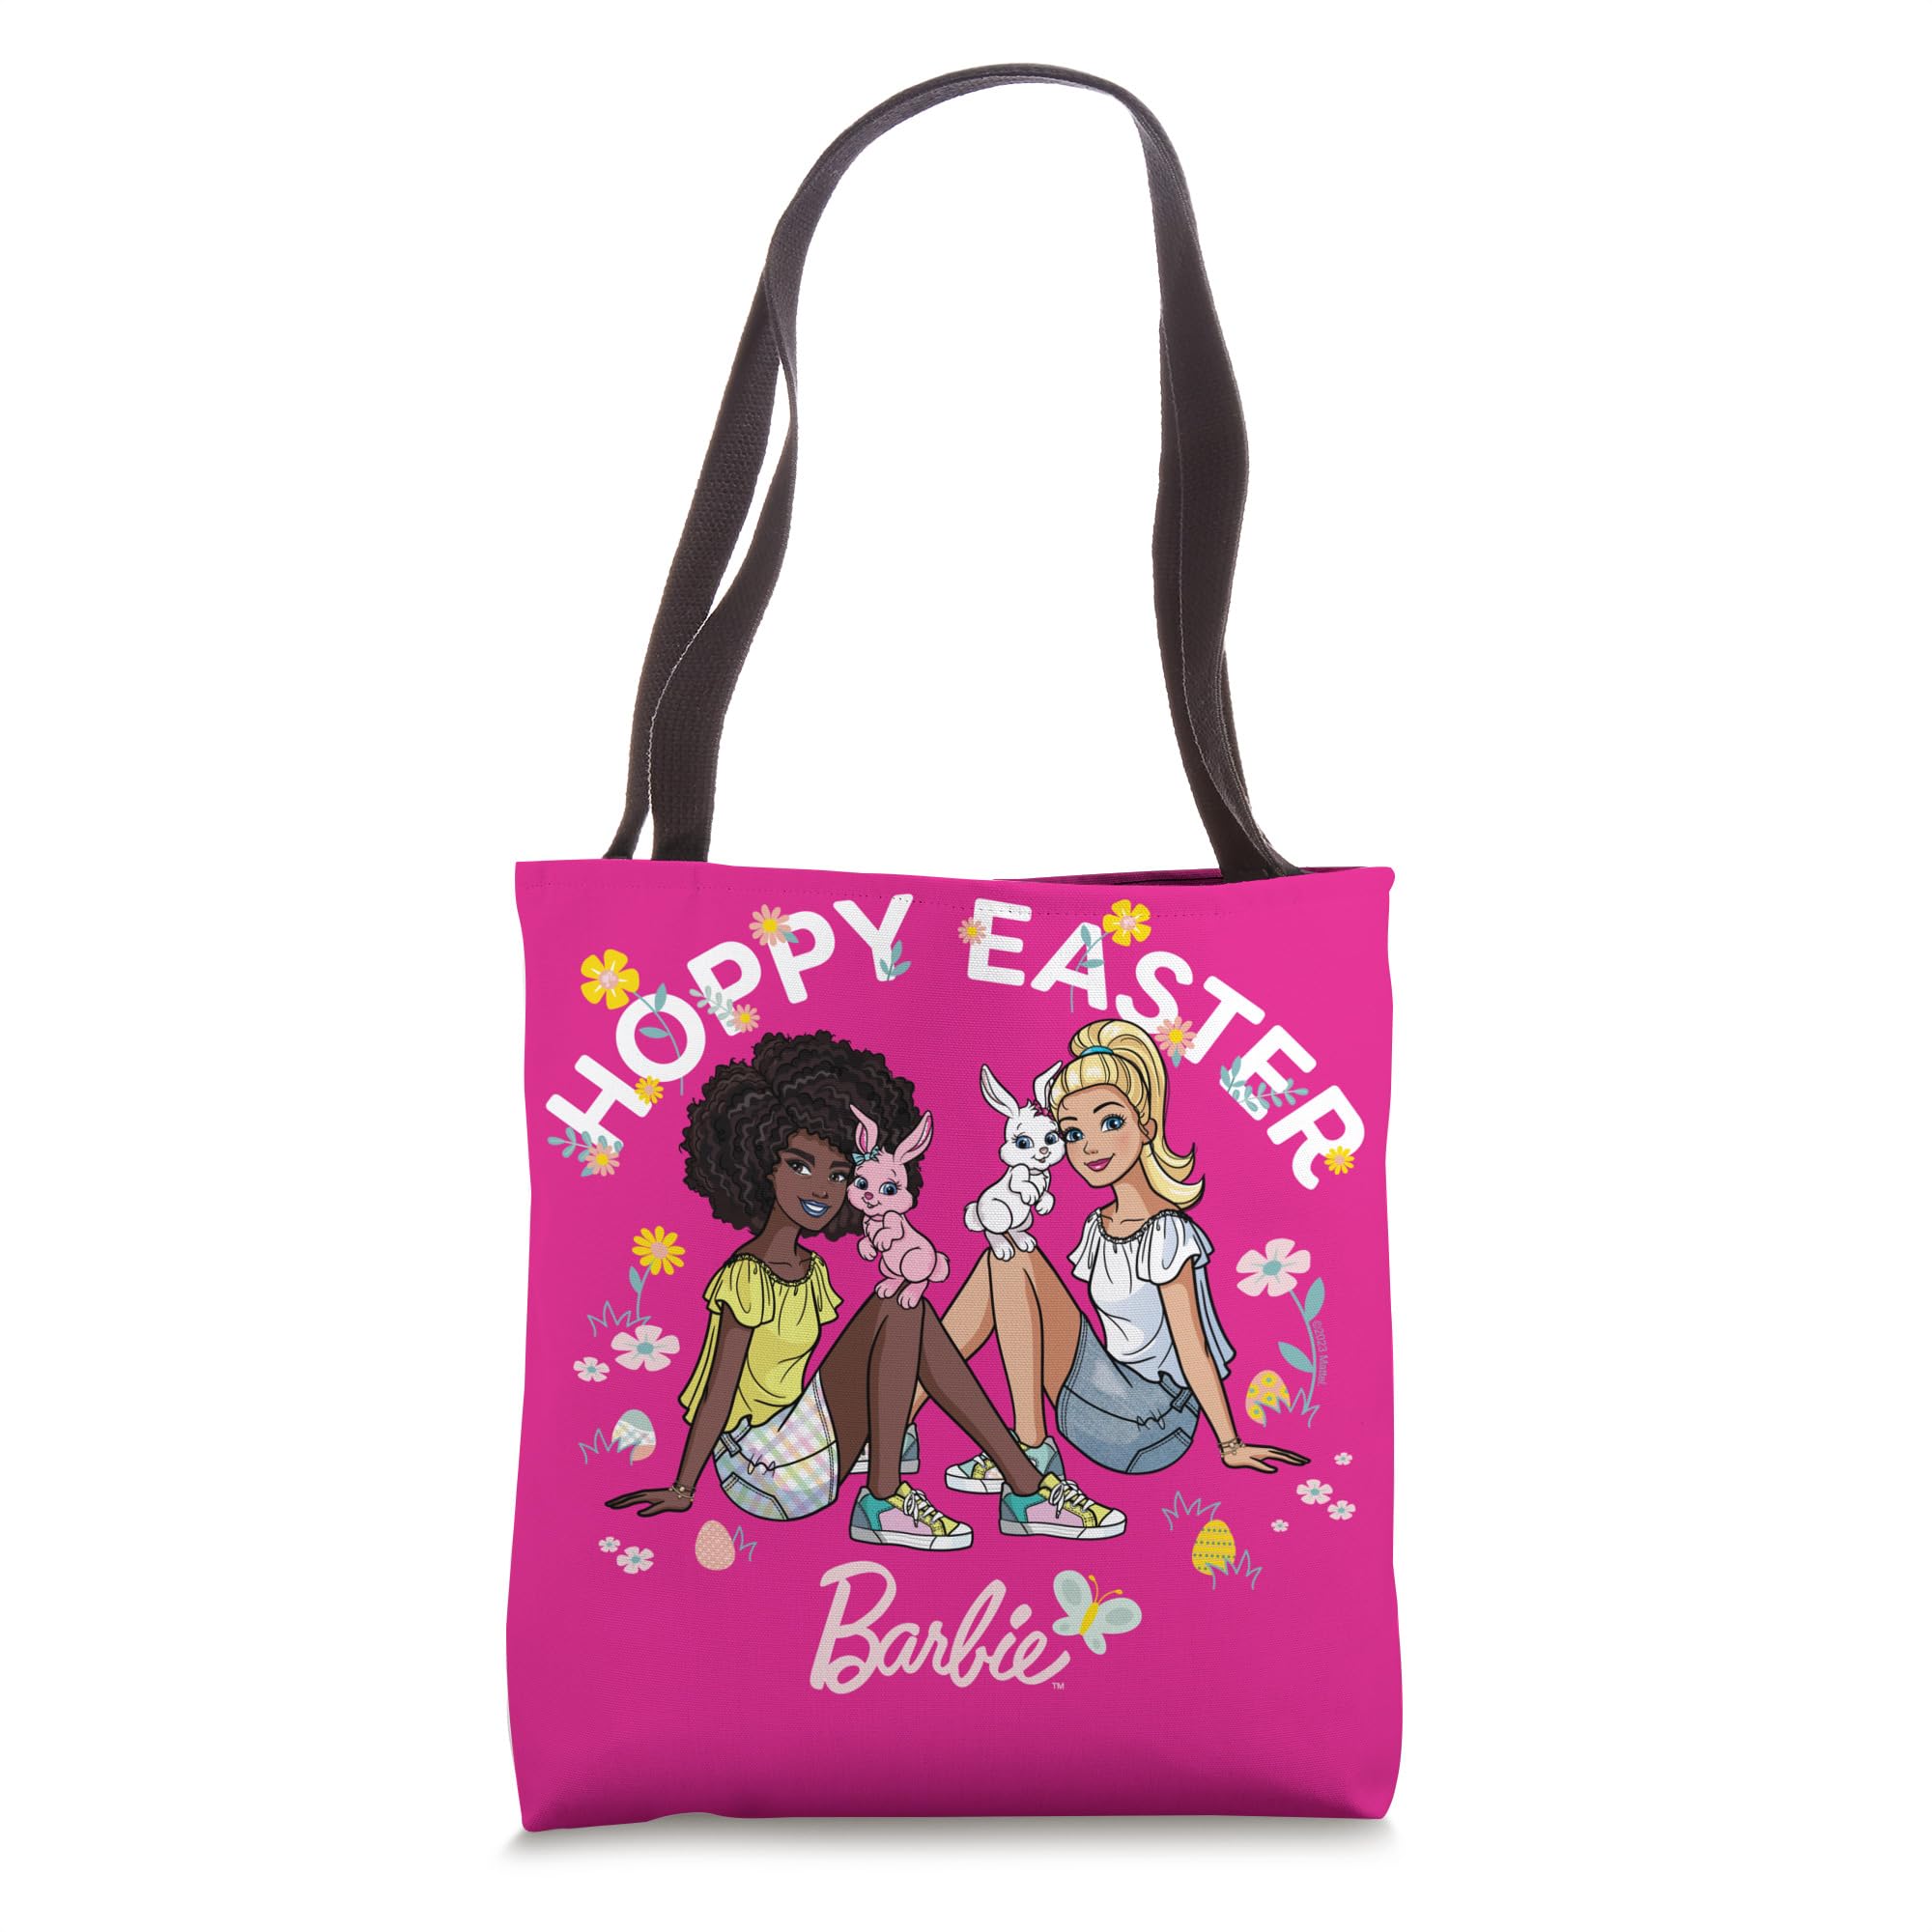 Barbie - Hoppy Easter Barbie Tote Bag